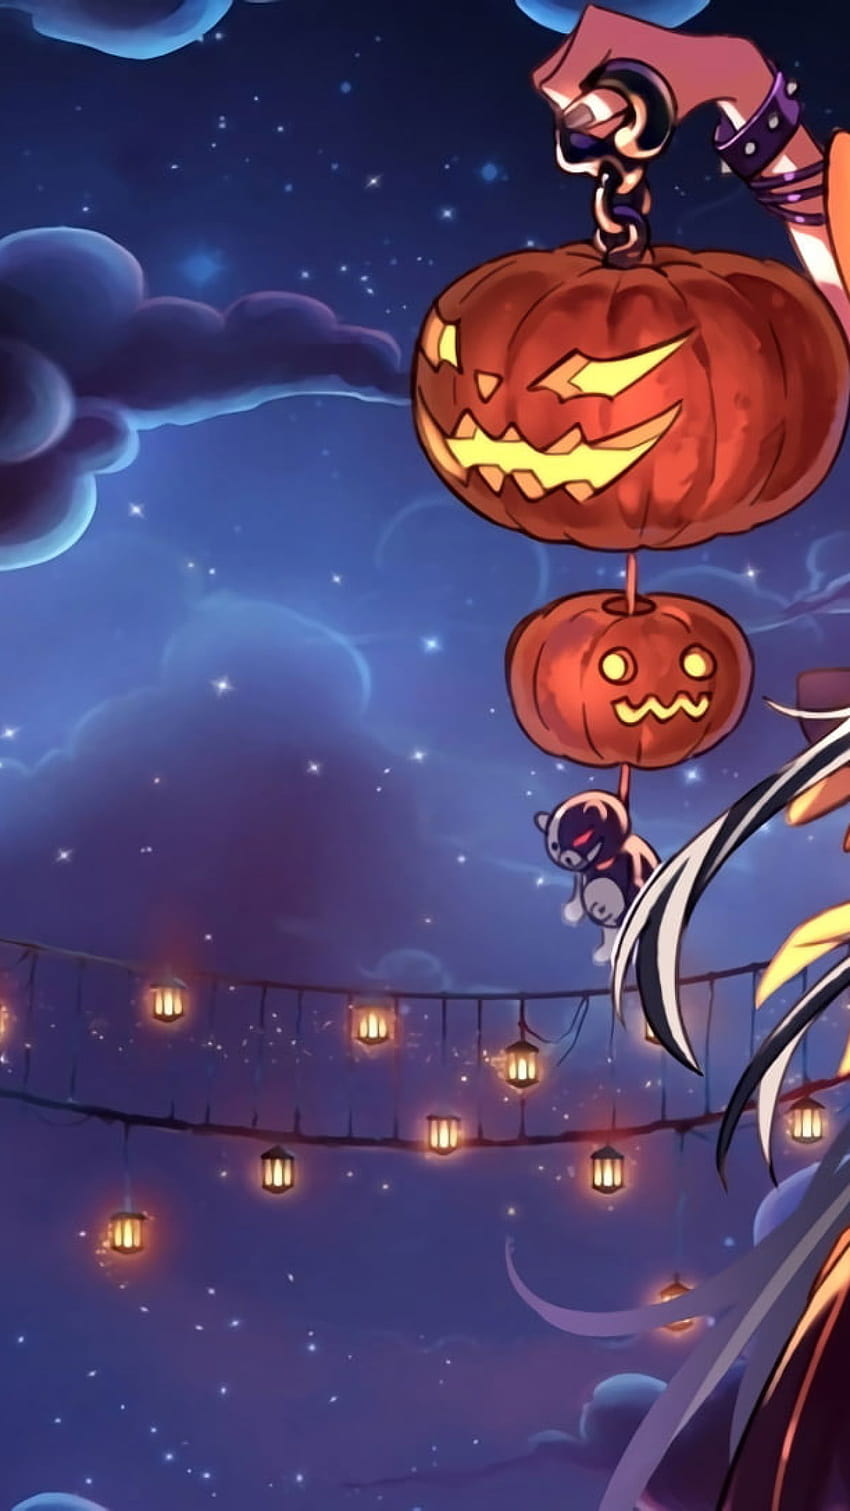 Spooky Halloween Night (Event) - from ARGONAVIS Wiki